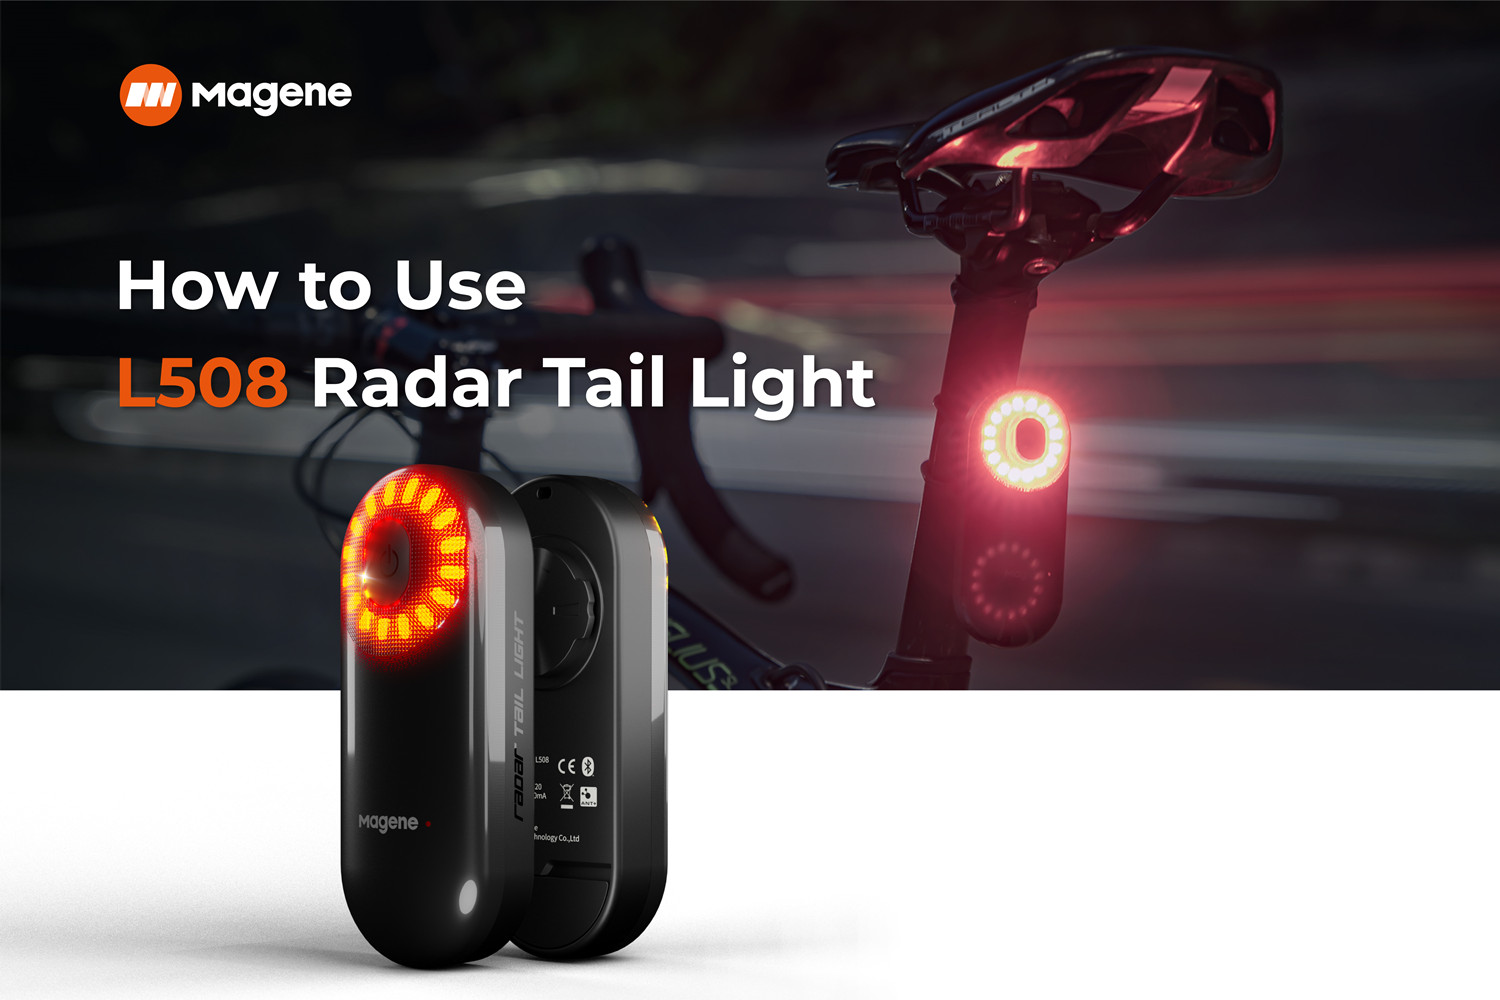 How to Use Magene L508 Radar Tail Light